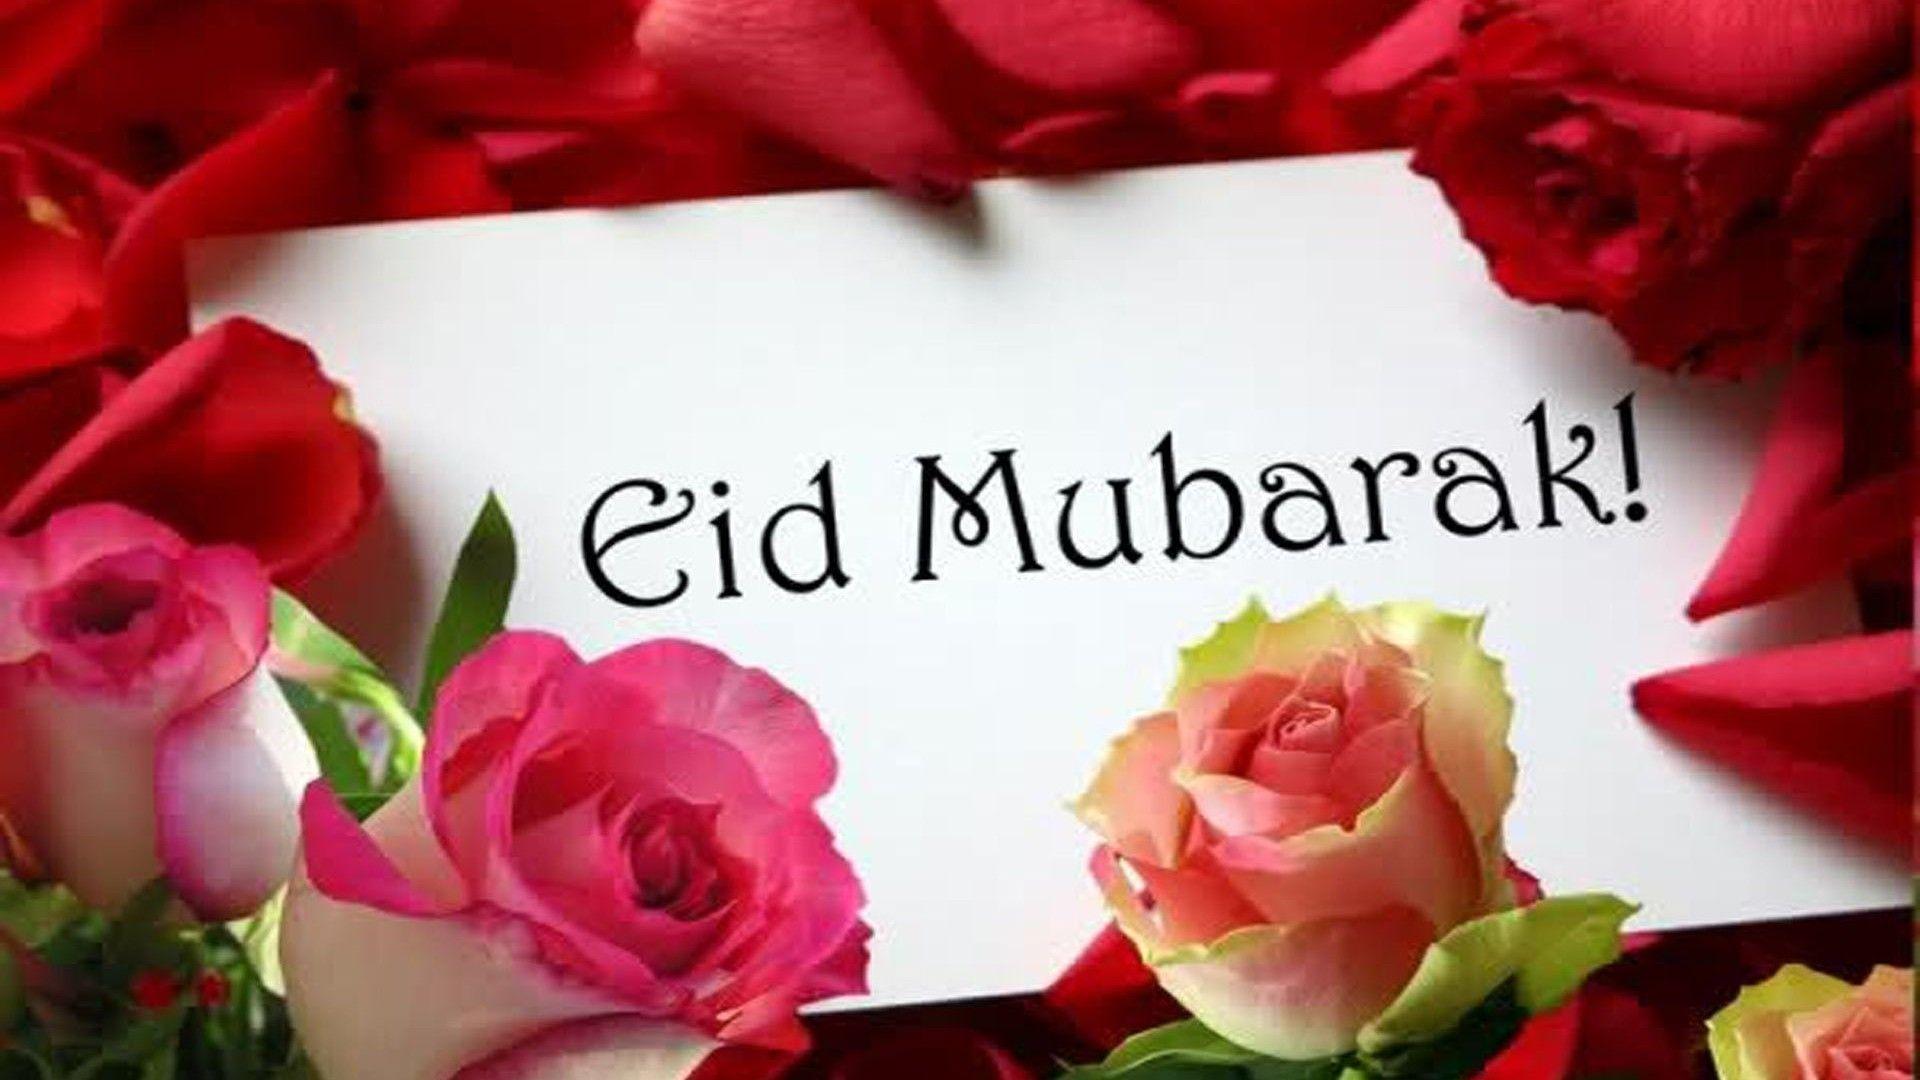 Eid Mubarak Cards In Roses Free Hd Wallpaper